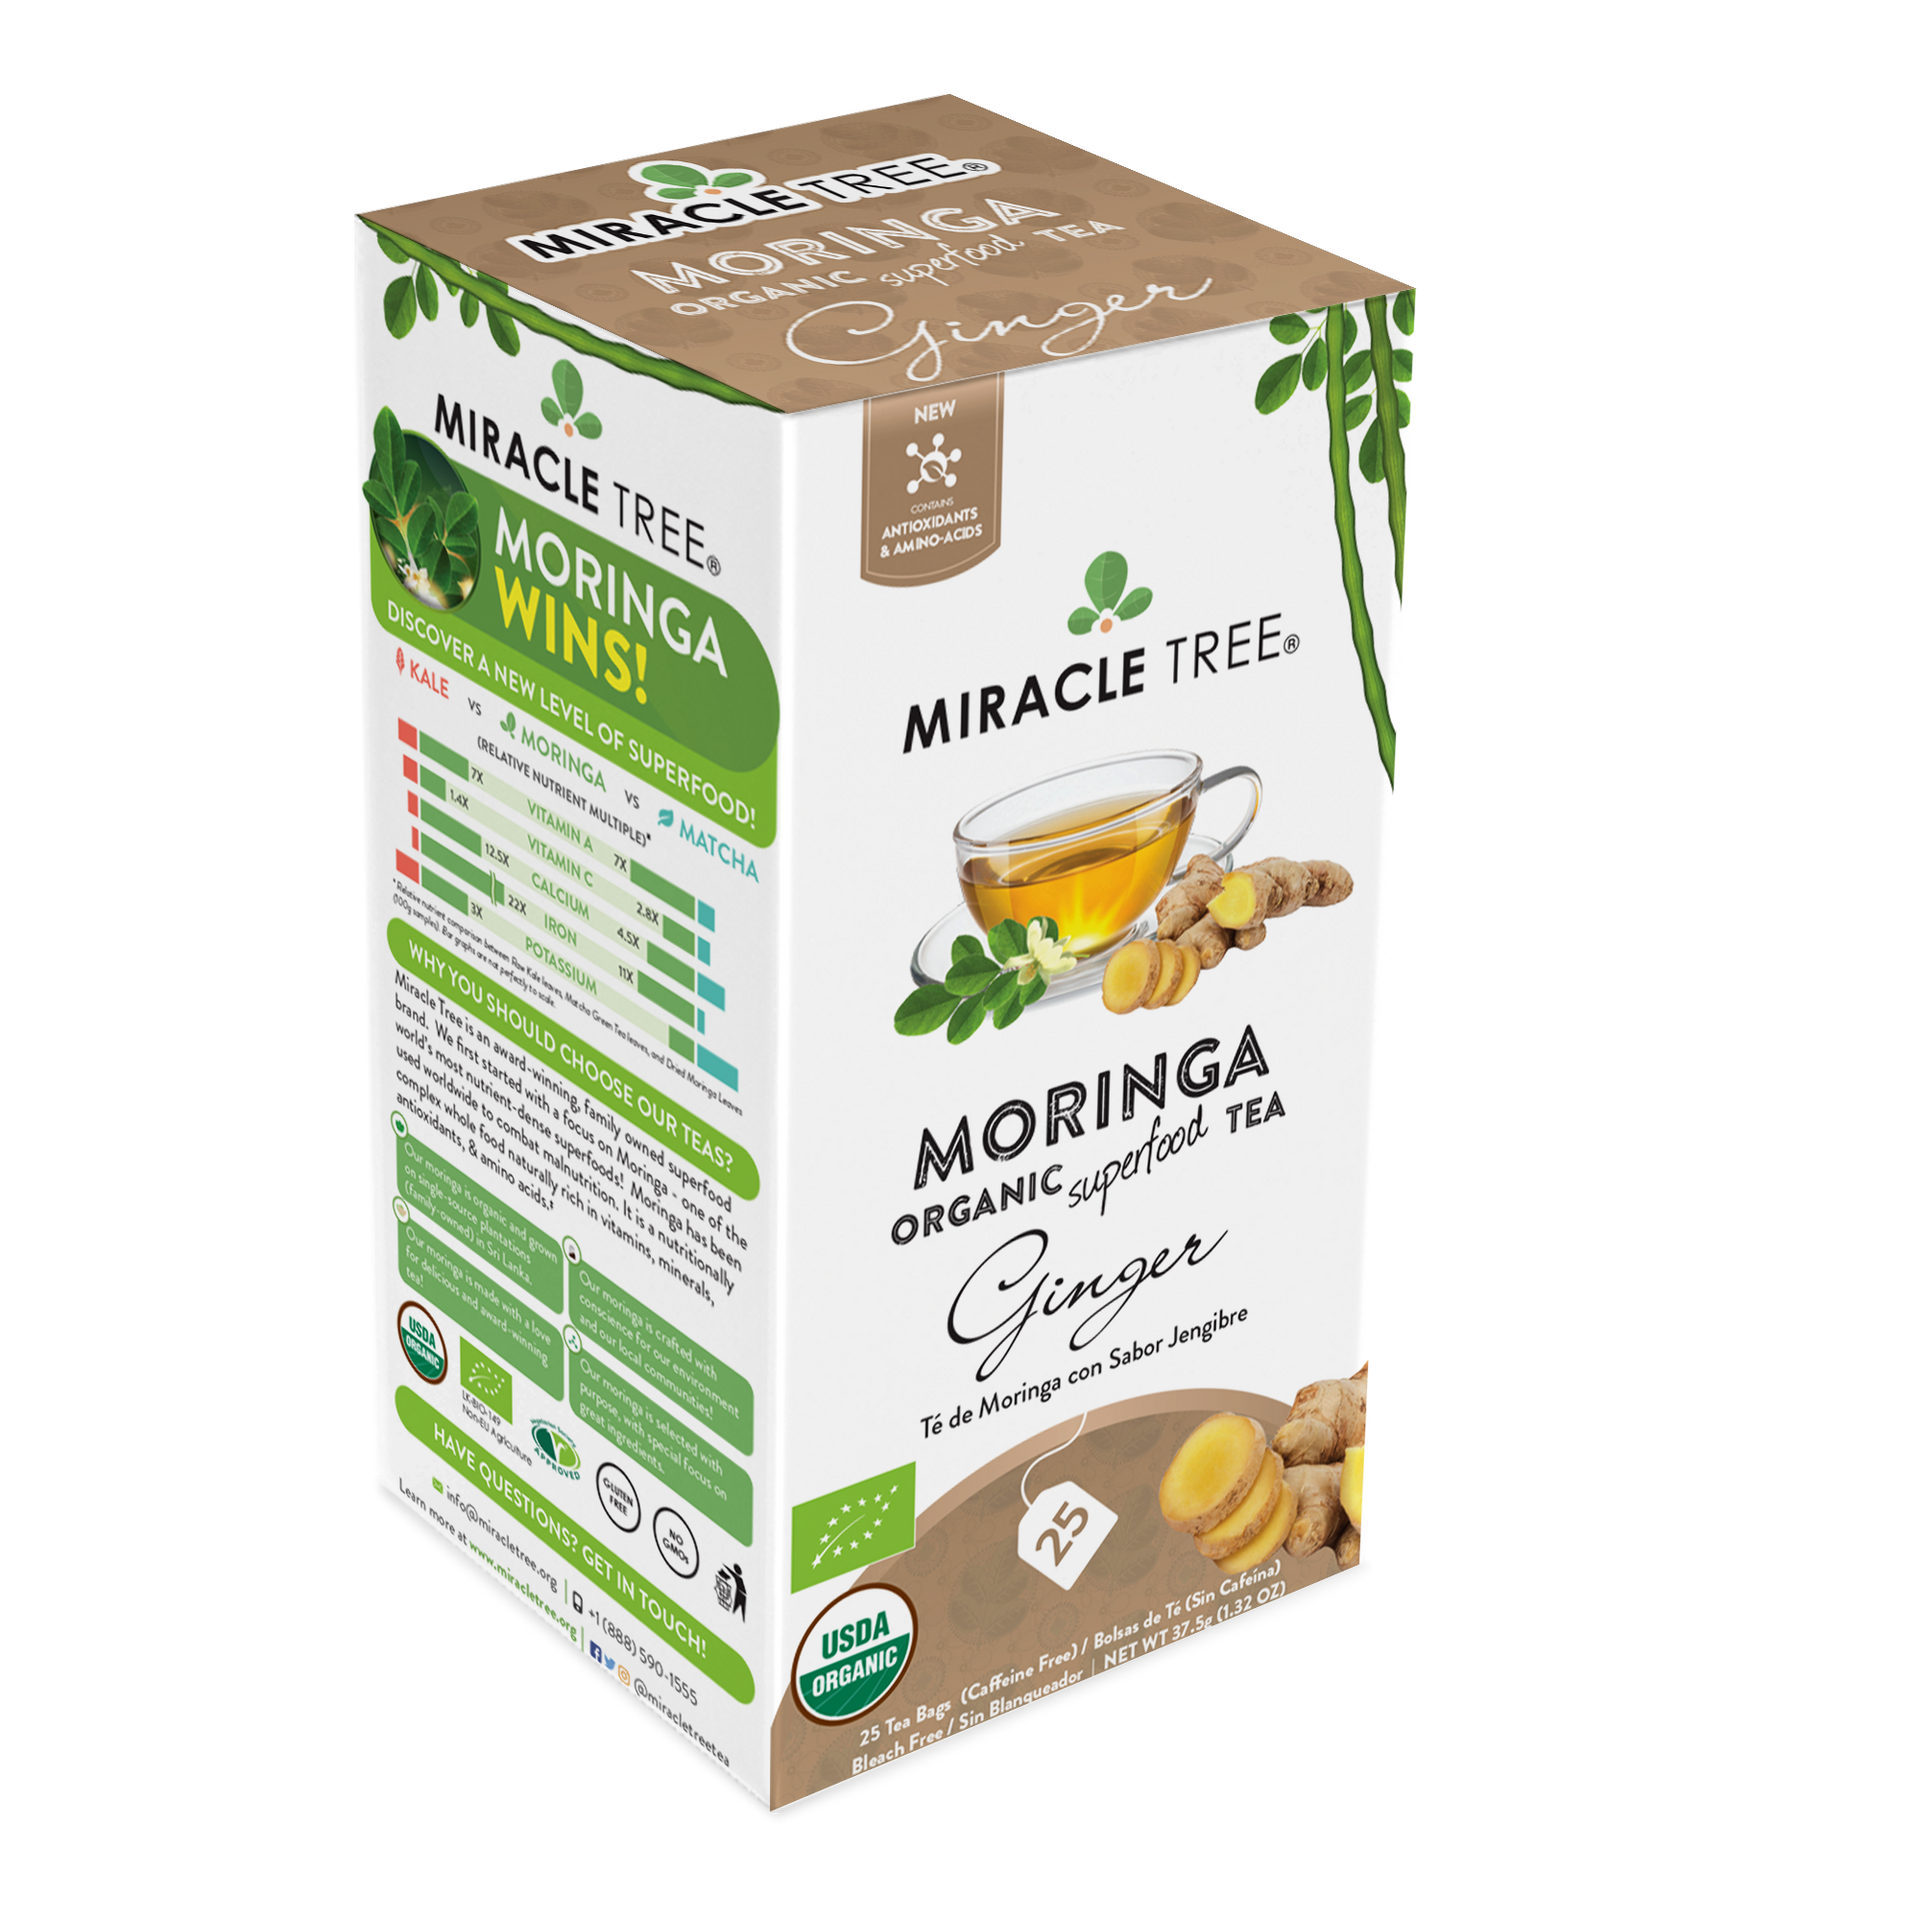 Miracle Tree's Organic Moringa Tea, Ginger - Mercantile Mountain